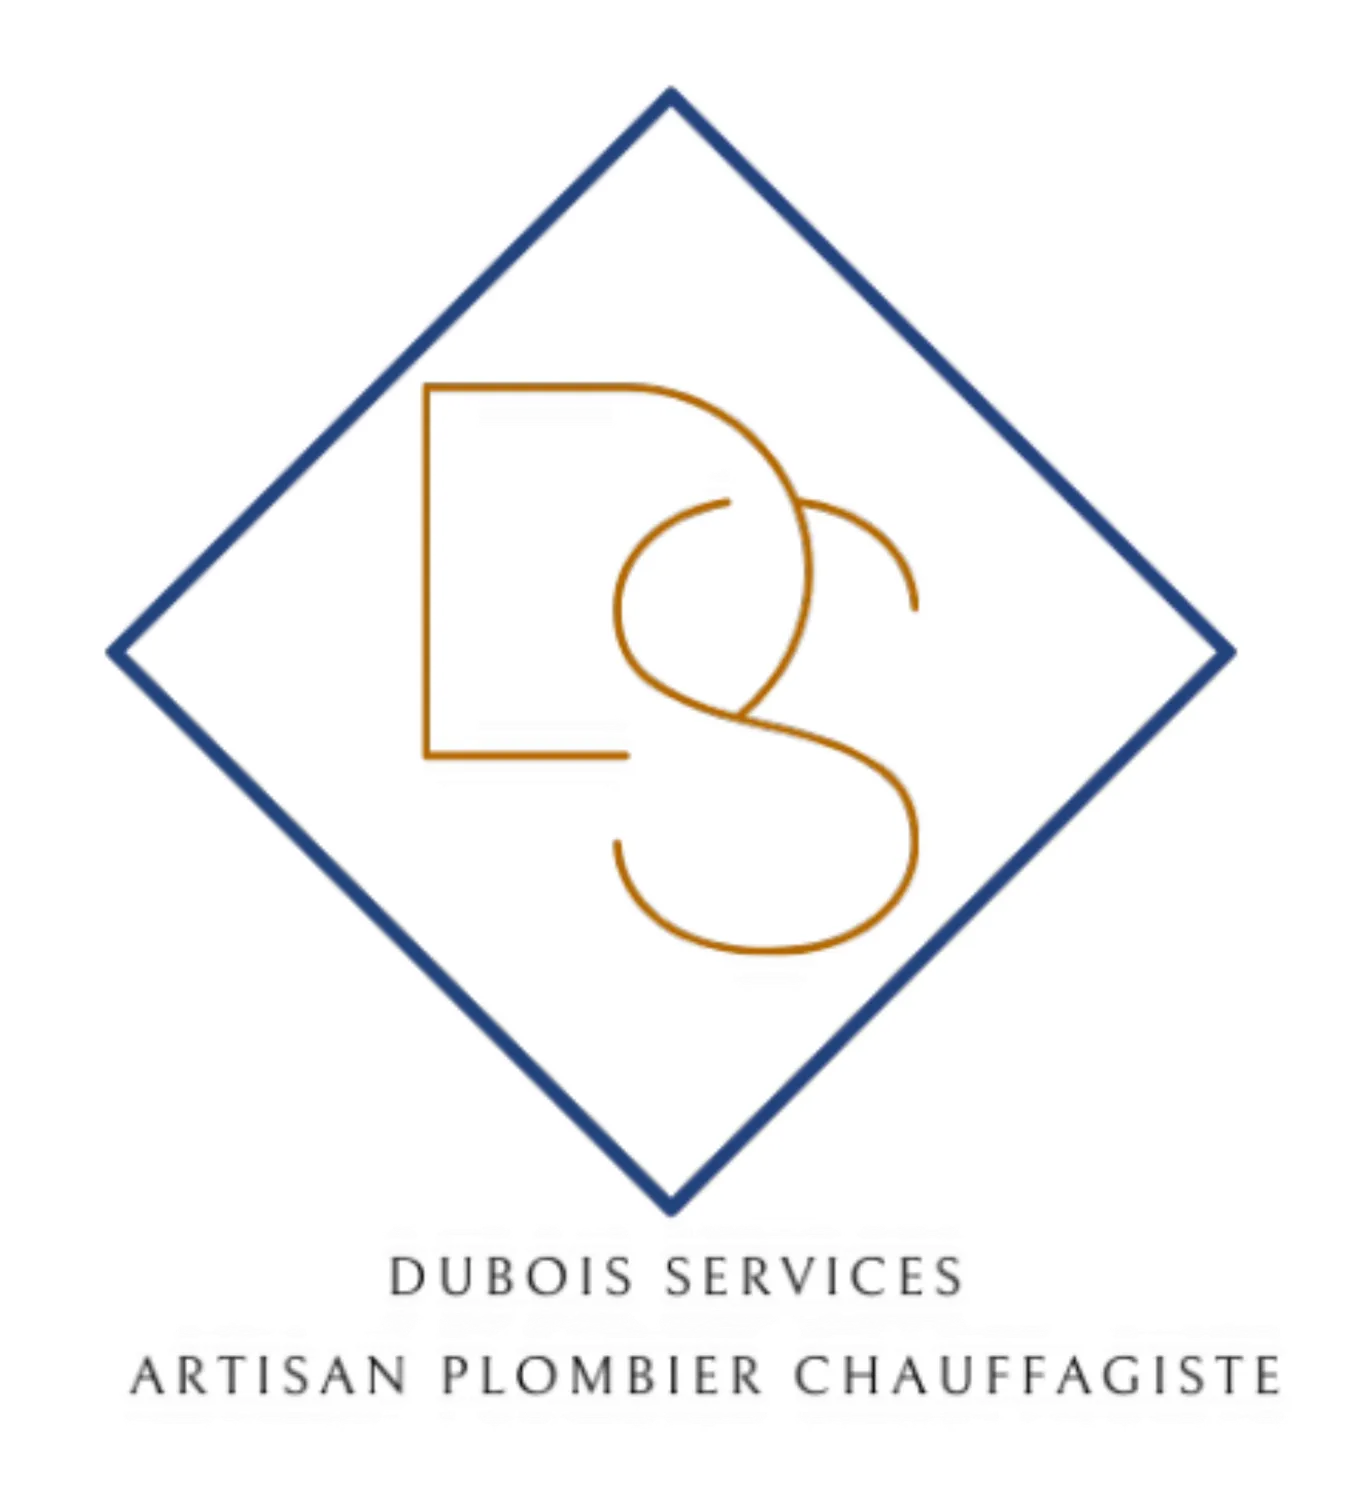 Dubois Services_logo